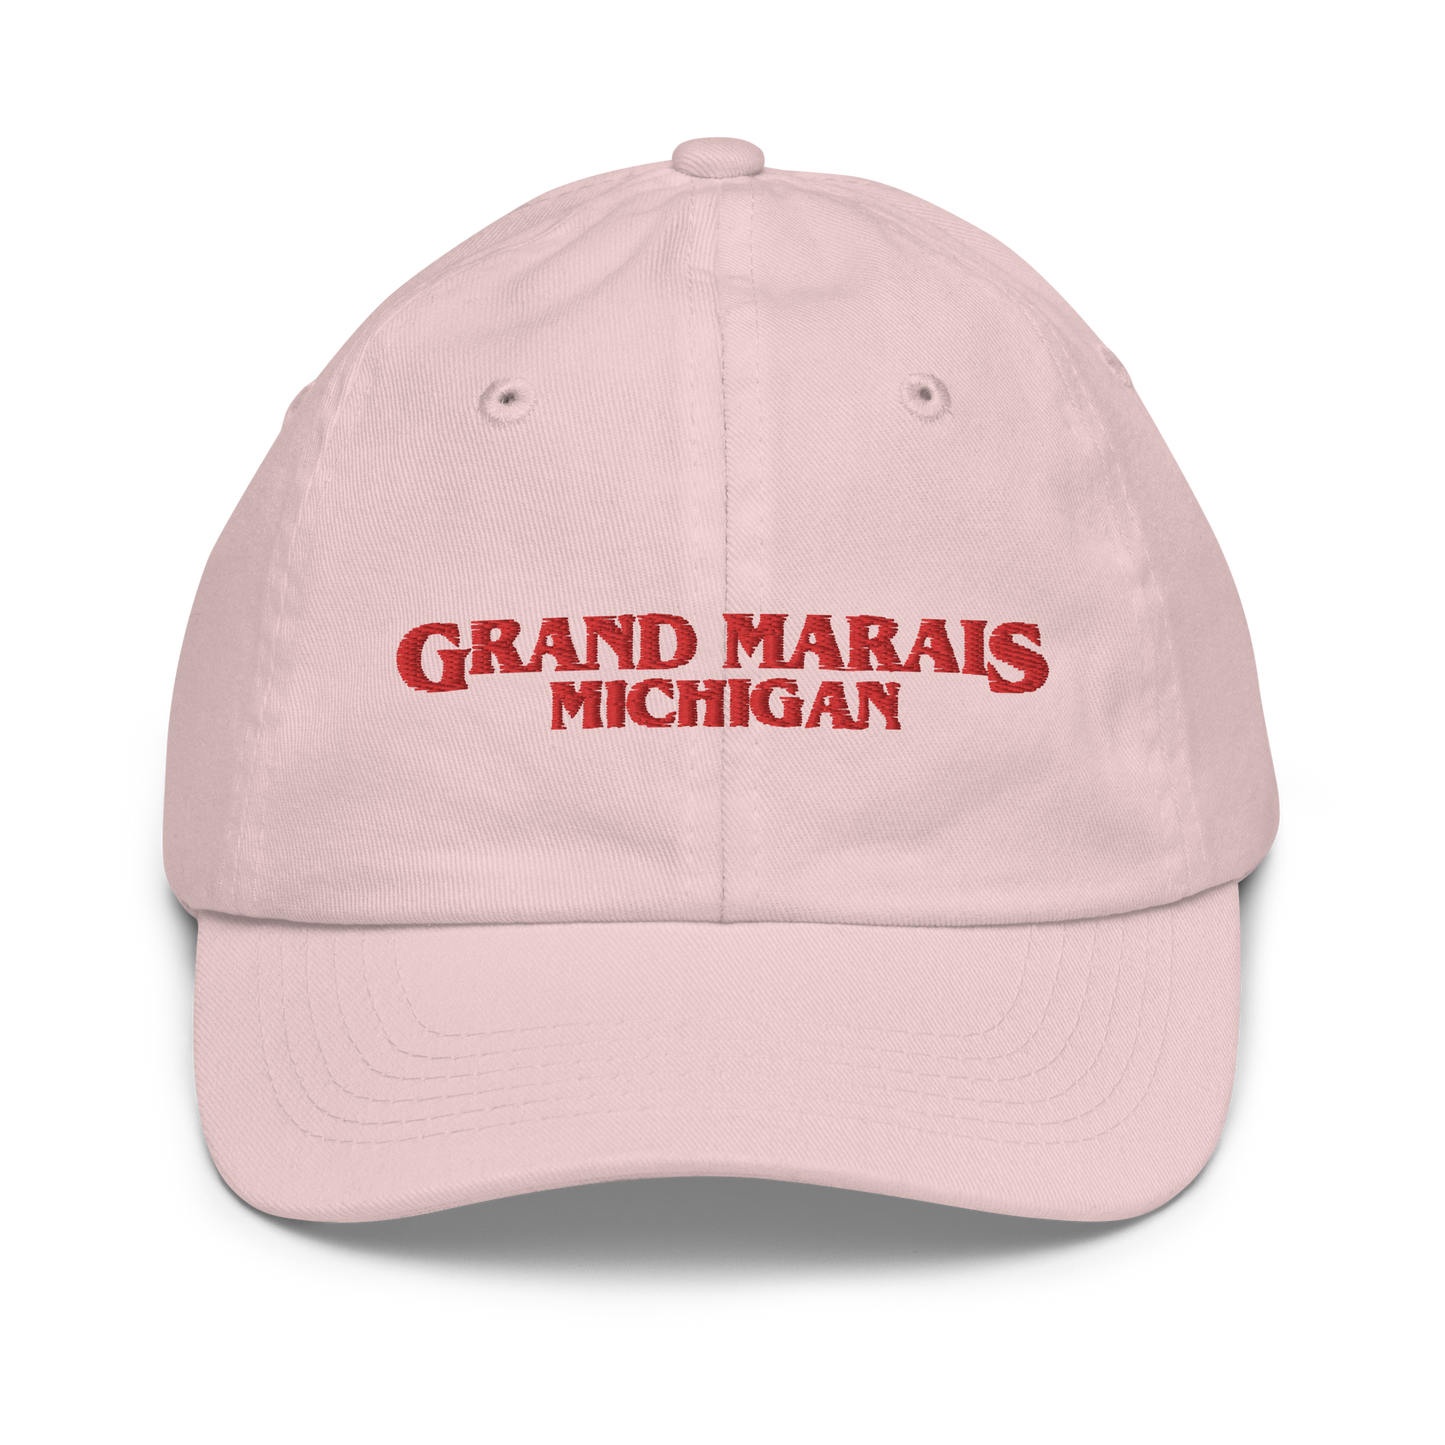 'Grand Marais Michigan' Youth Baseball Cap (1980s Drama Parody)